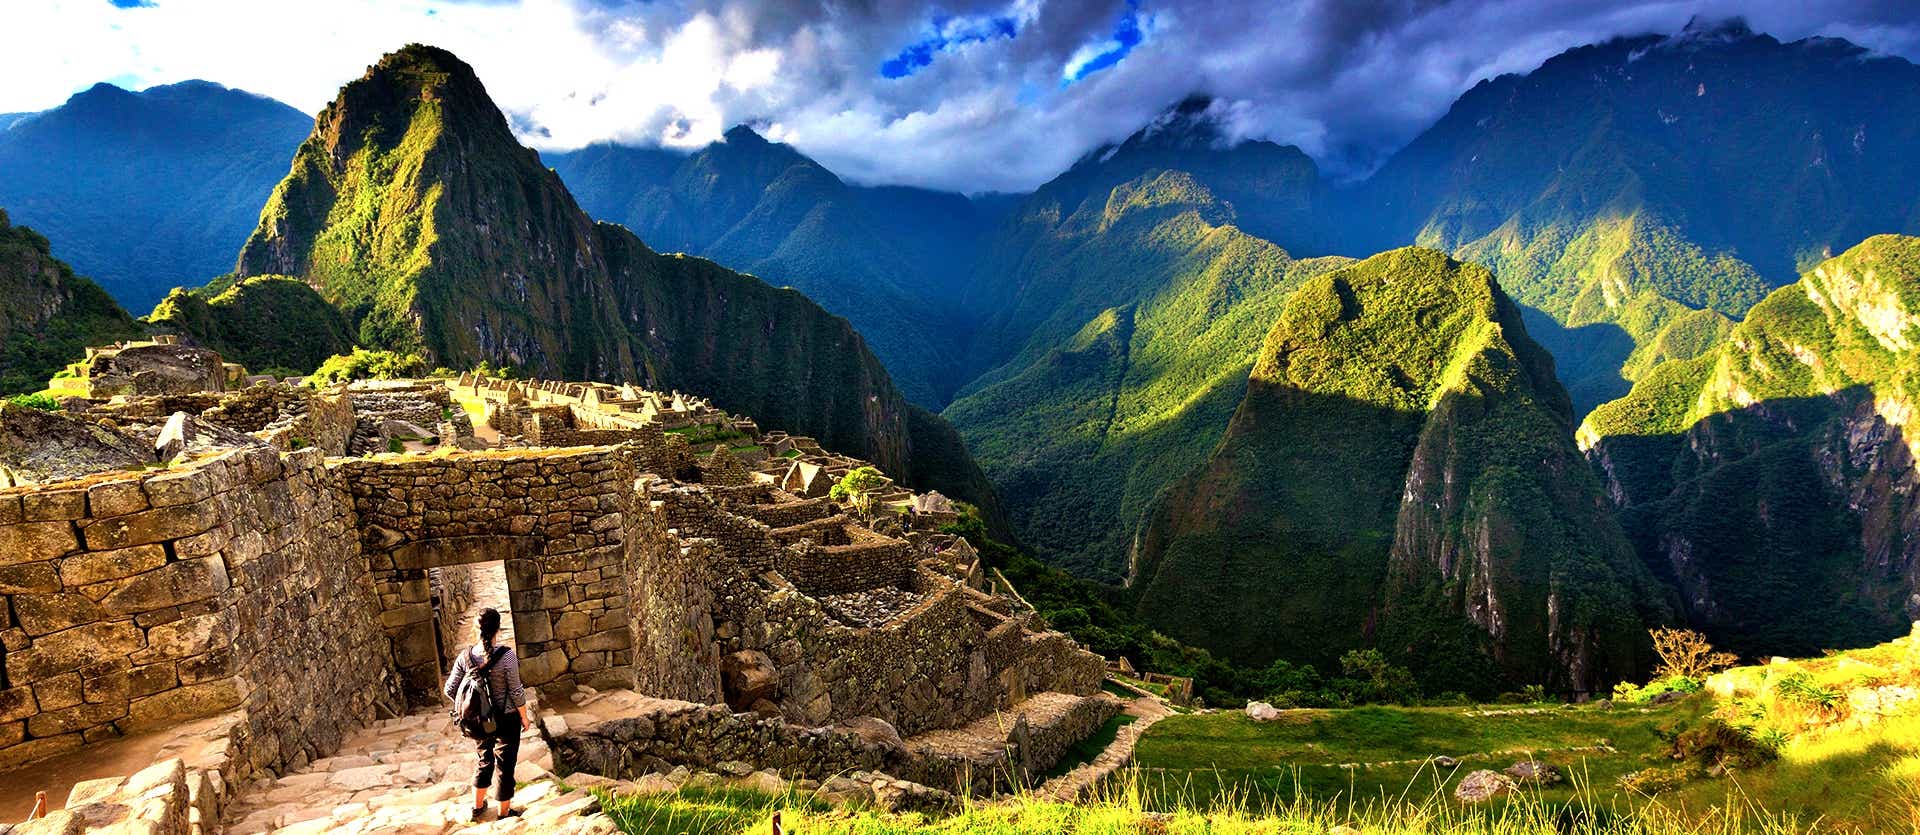 Machu Picchu <span class="iconos separador"></span> Peru